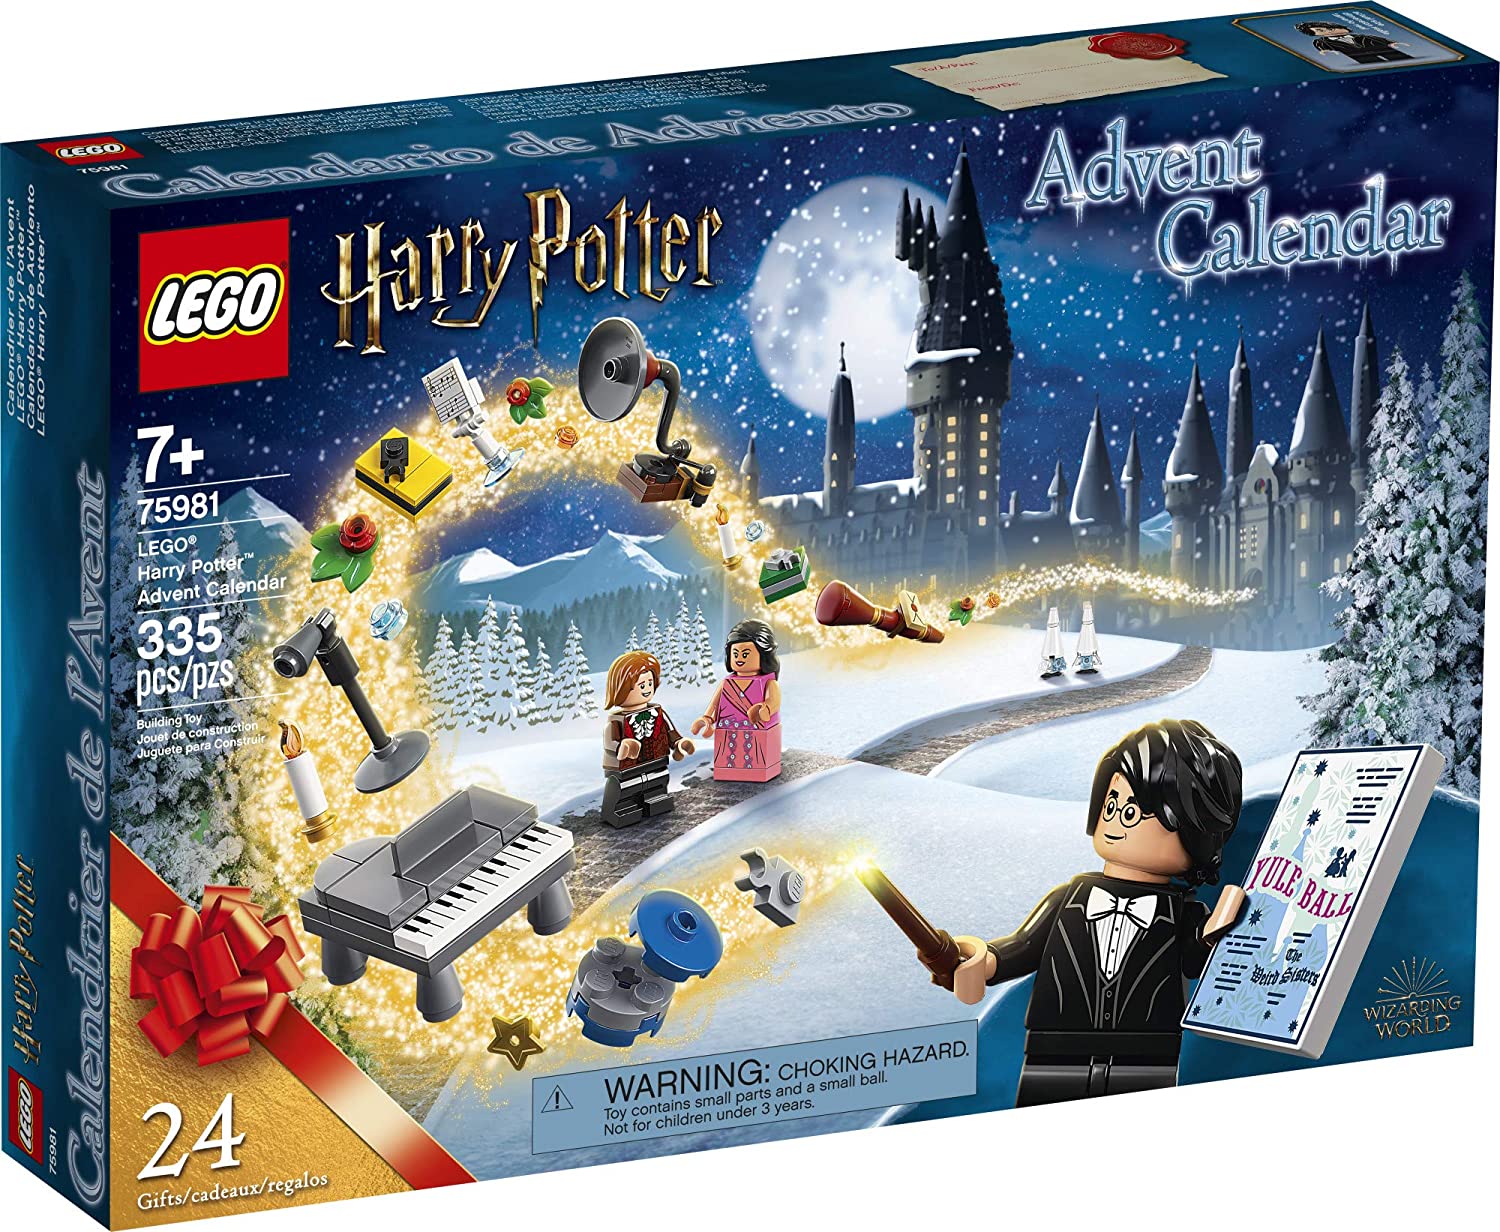 LEGO Harry Potter Advent Calendar 2020 The Hogwarts Yule Ball